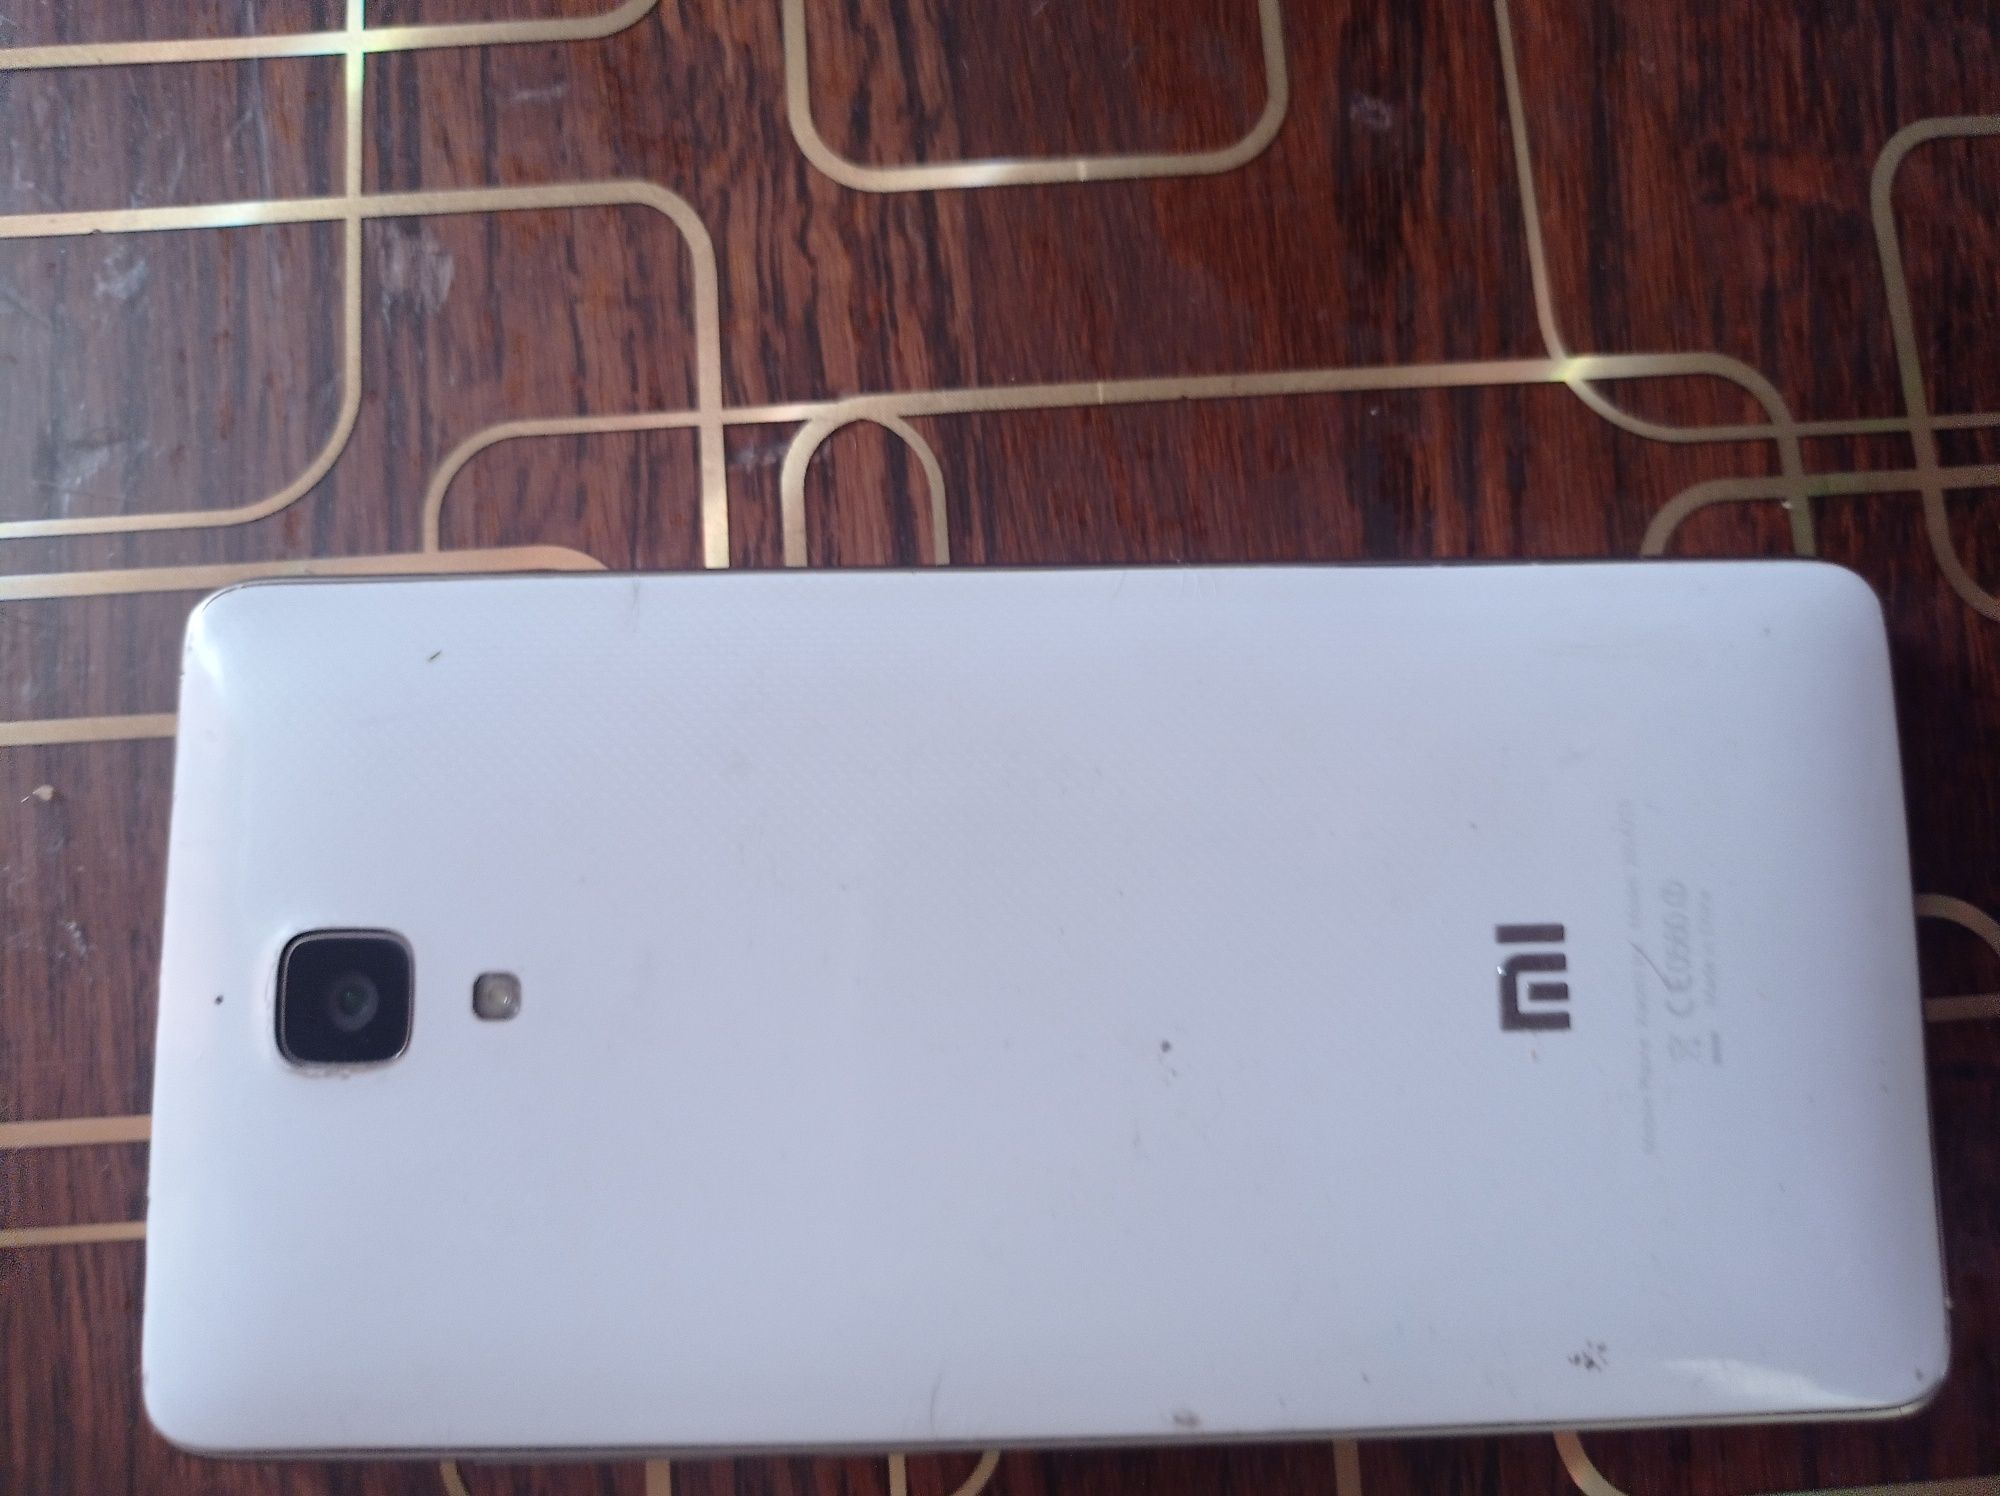 Xiaomi Mi4 3/16 недорого на комплекте